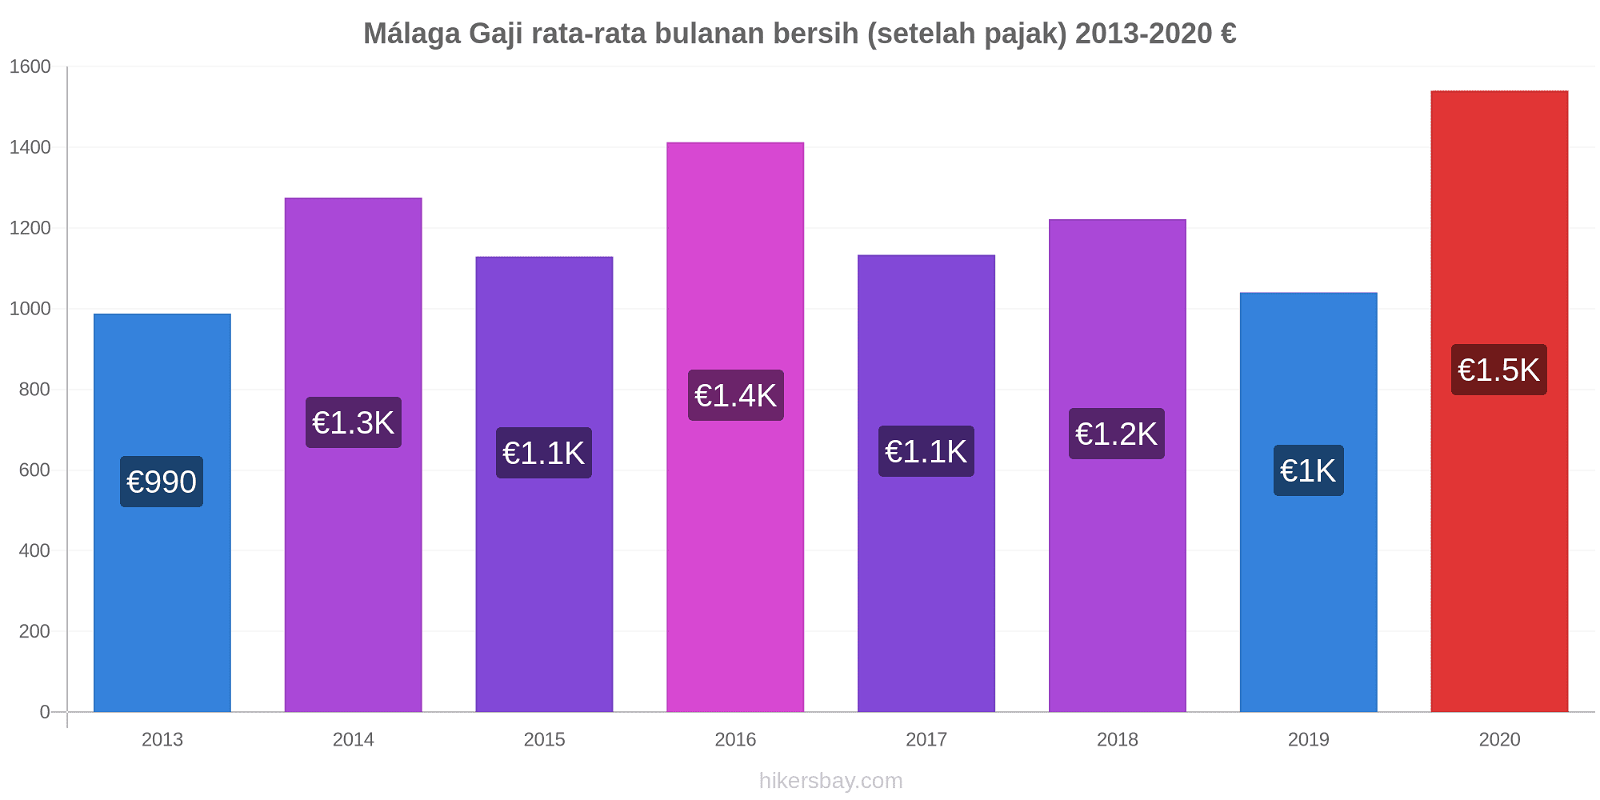 Málaga perubahan harga Gaji rata-rata bulanan bersih (setelah pajak) hikersbay.com